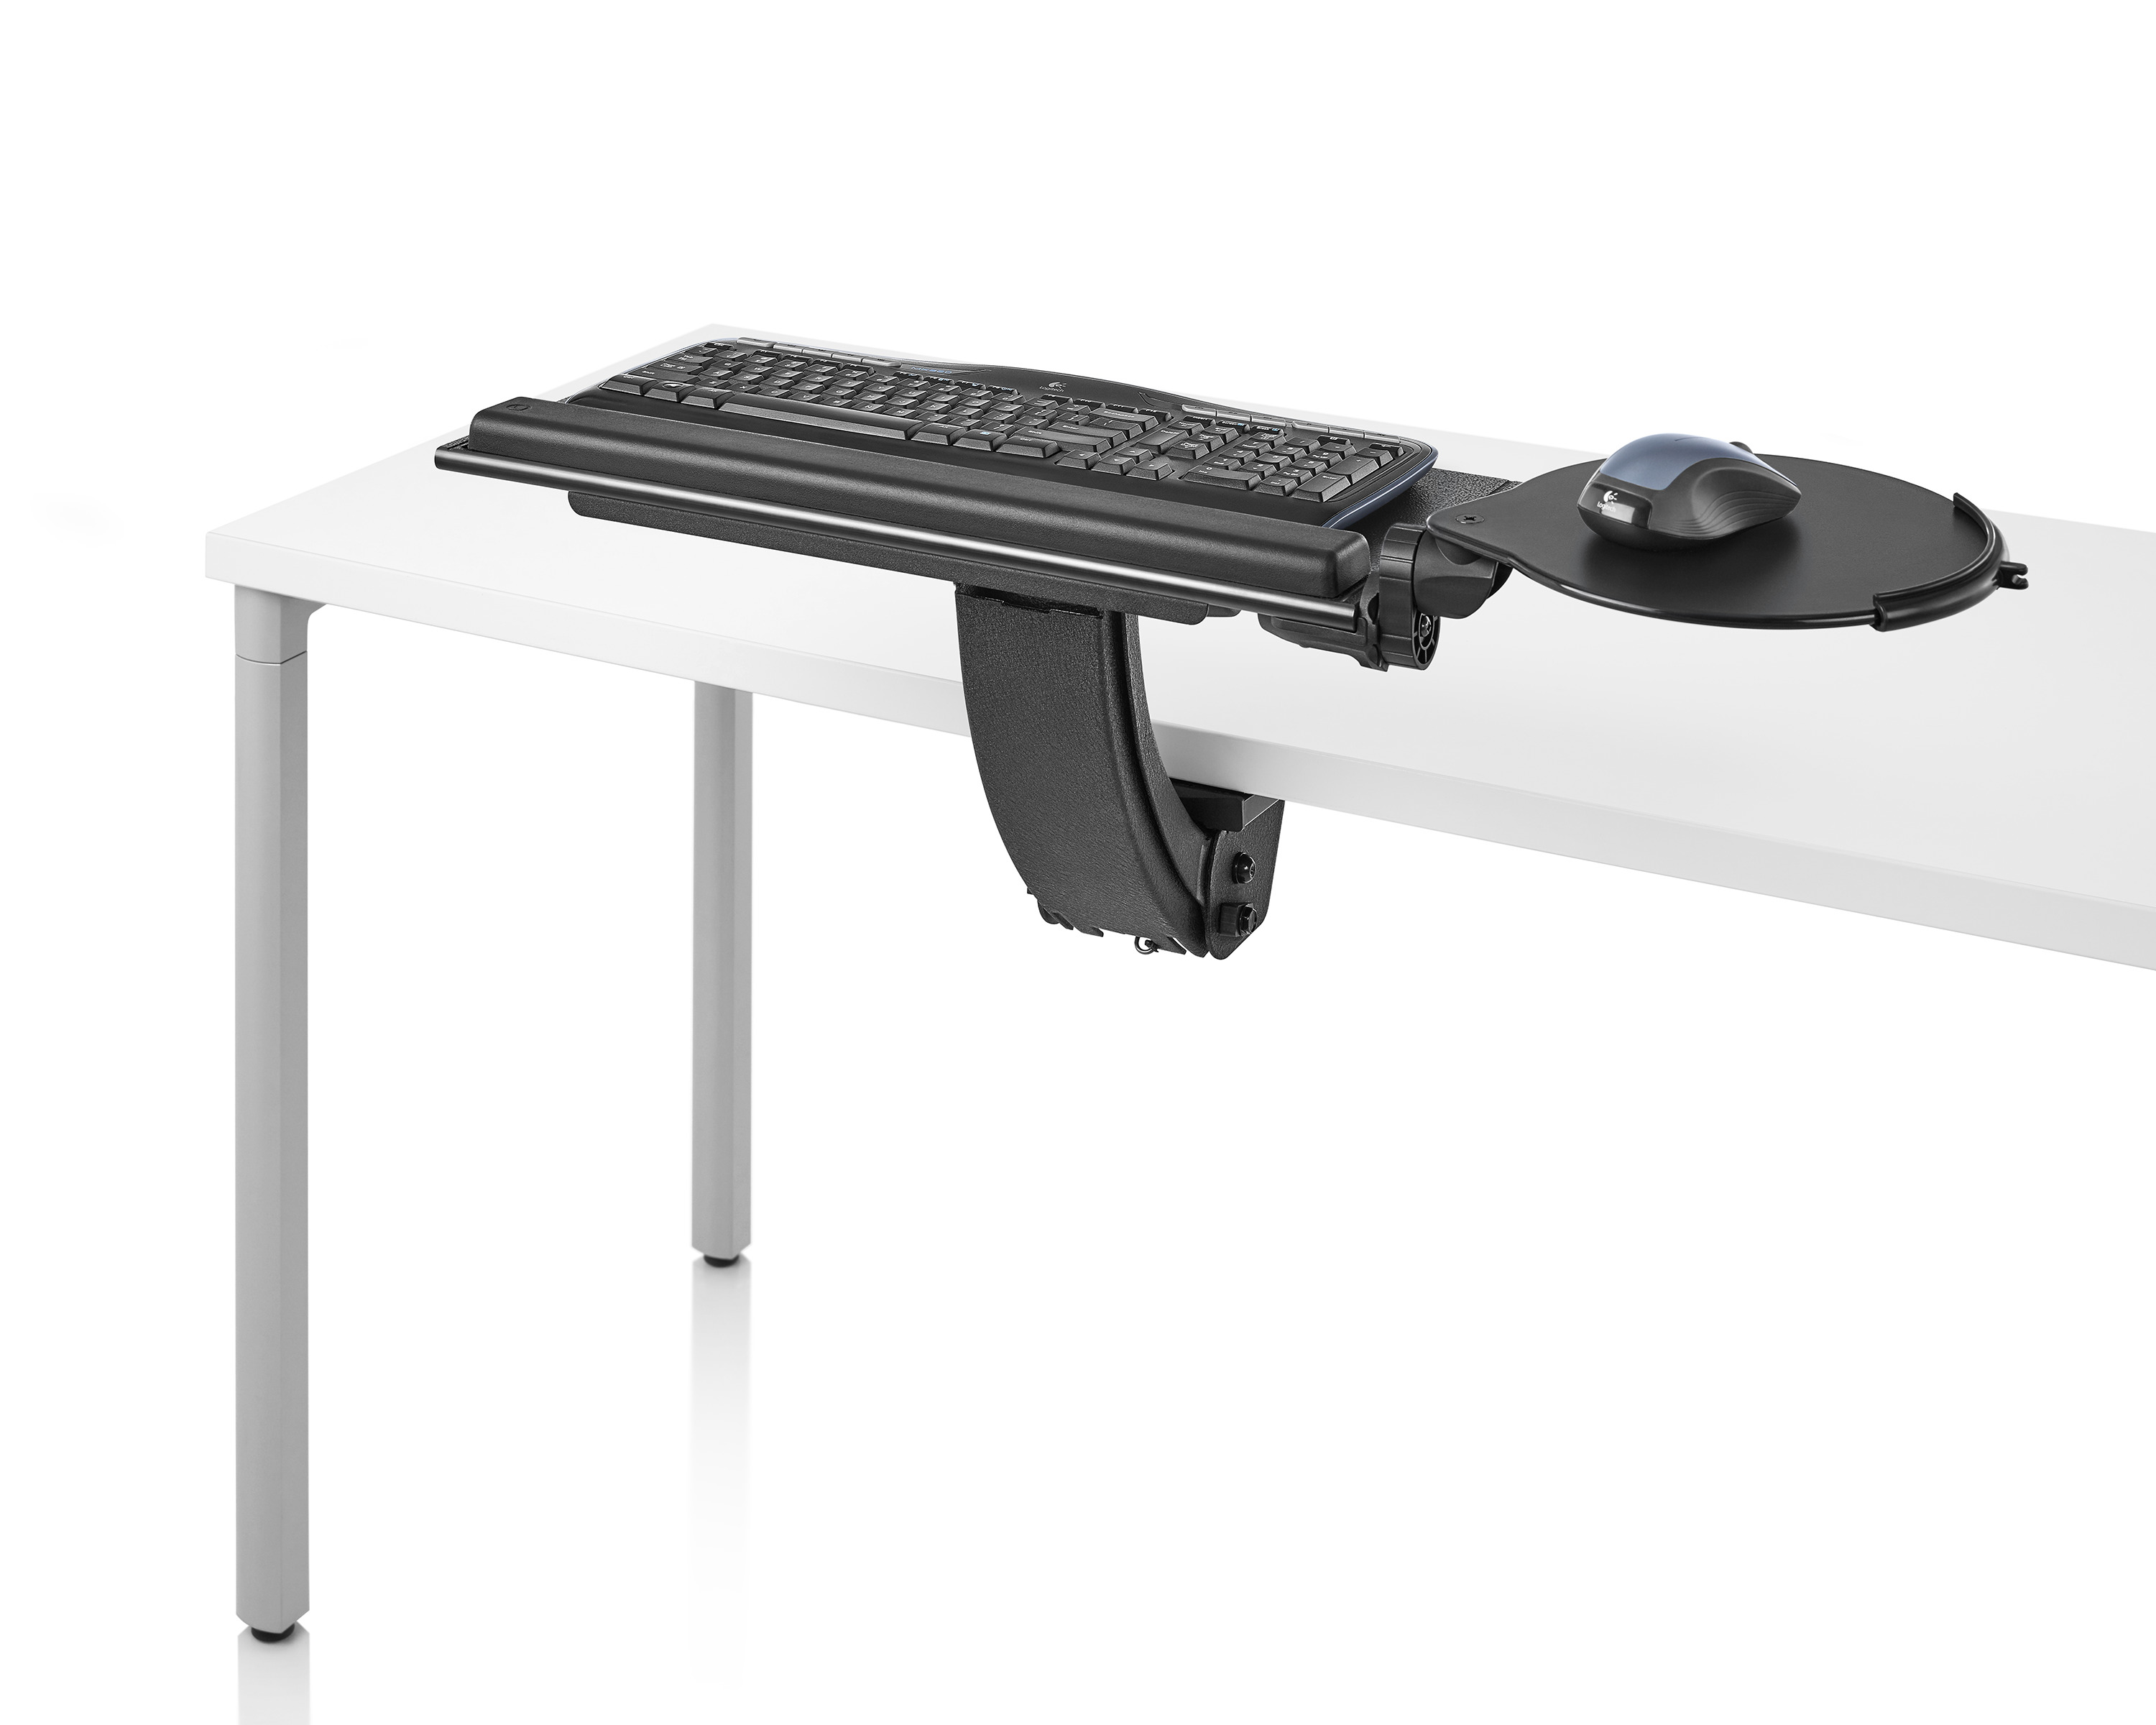 Keyboard support. Выдвижная клавиатура для стола. Подставка под клавиатуру. Подставка для клавиатуры выдвижная для стола. Крепление для клавиатуры под стол.